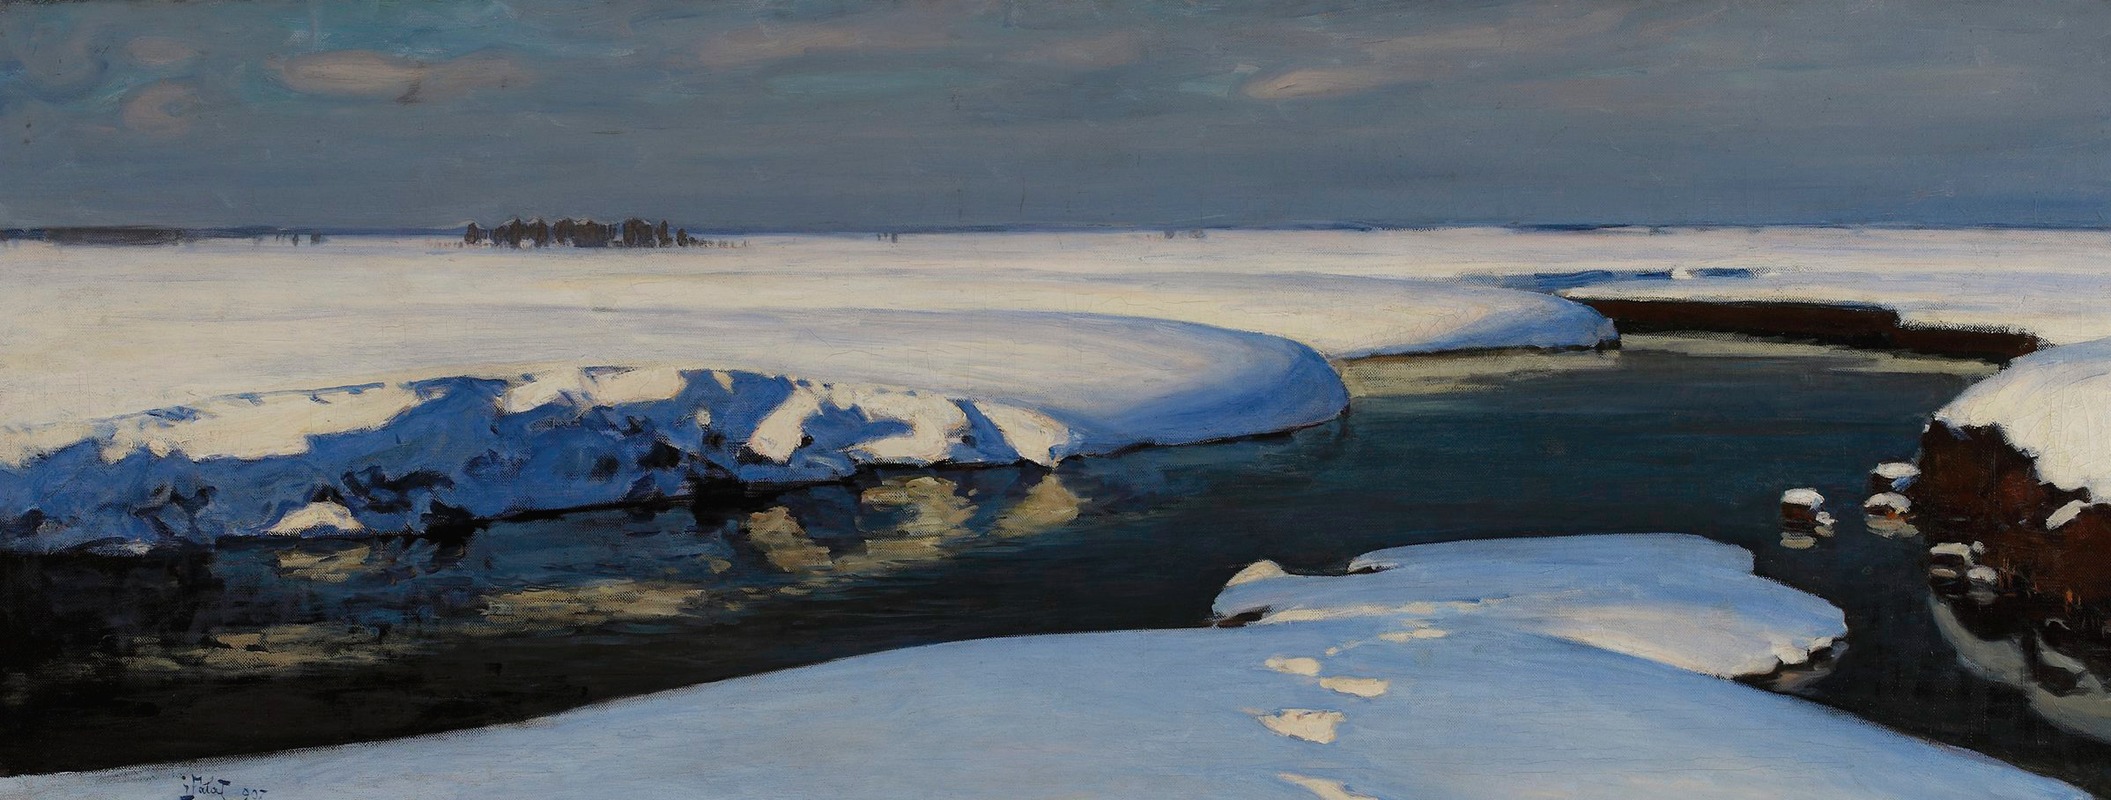 Julian Falat - Winter landscape with a river